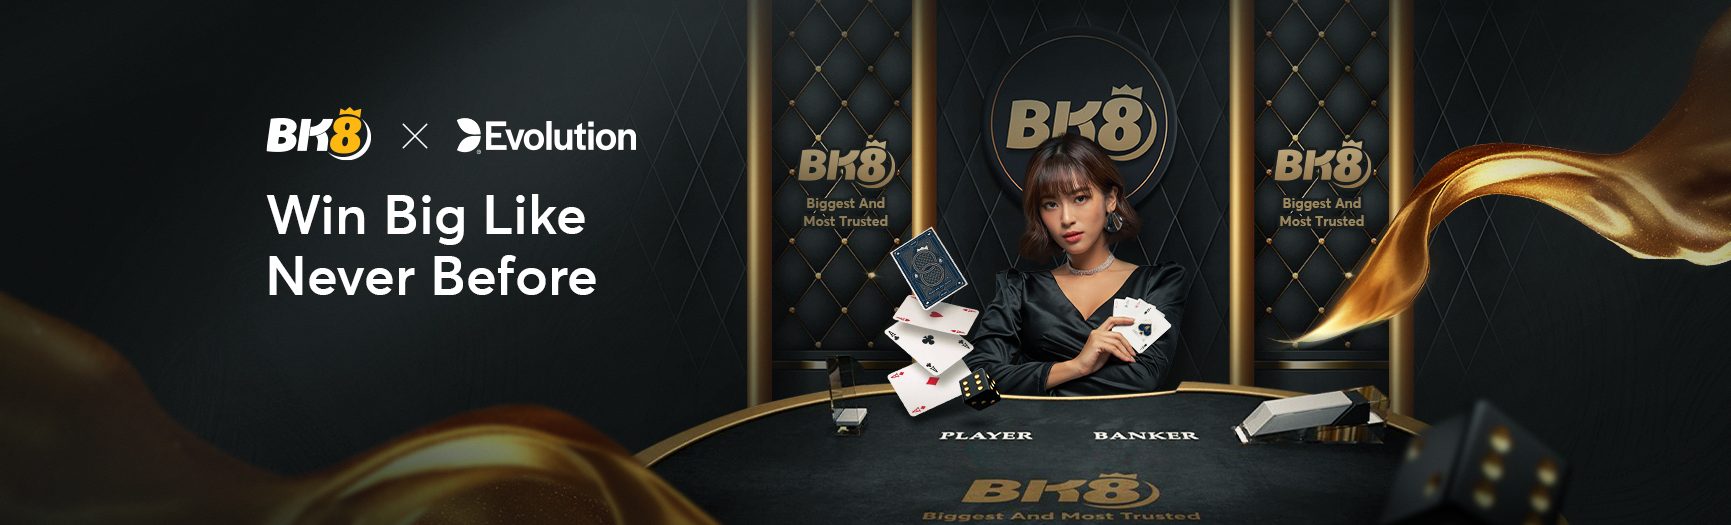 BK8 Live Casino